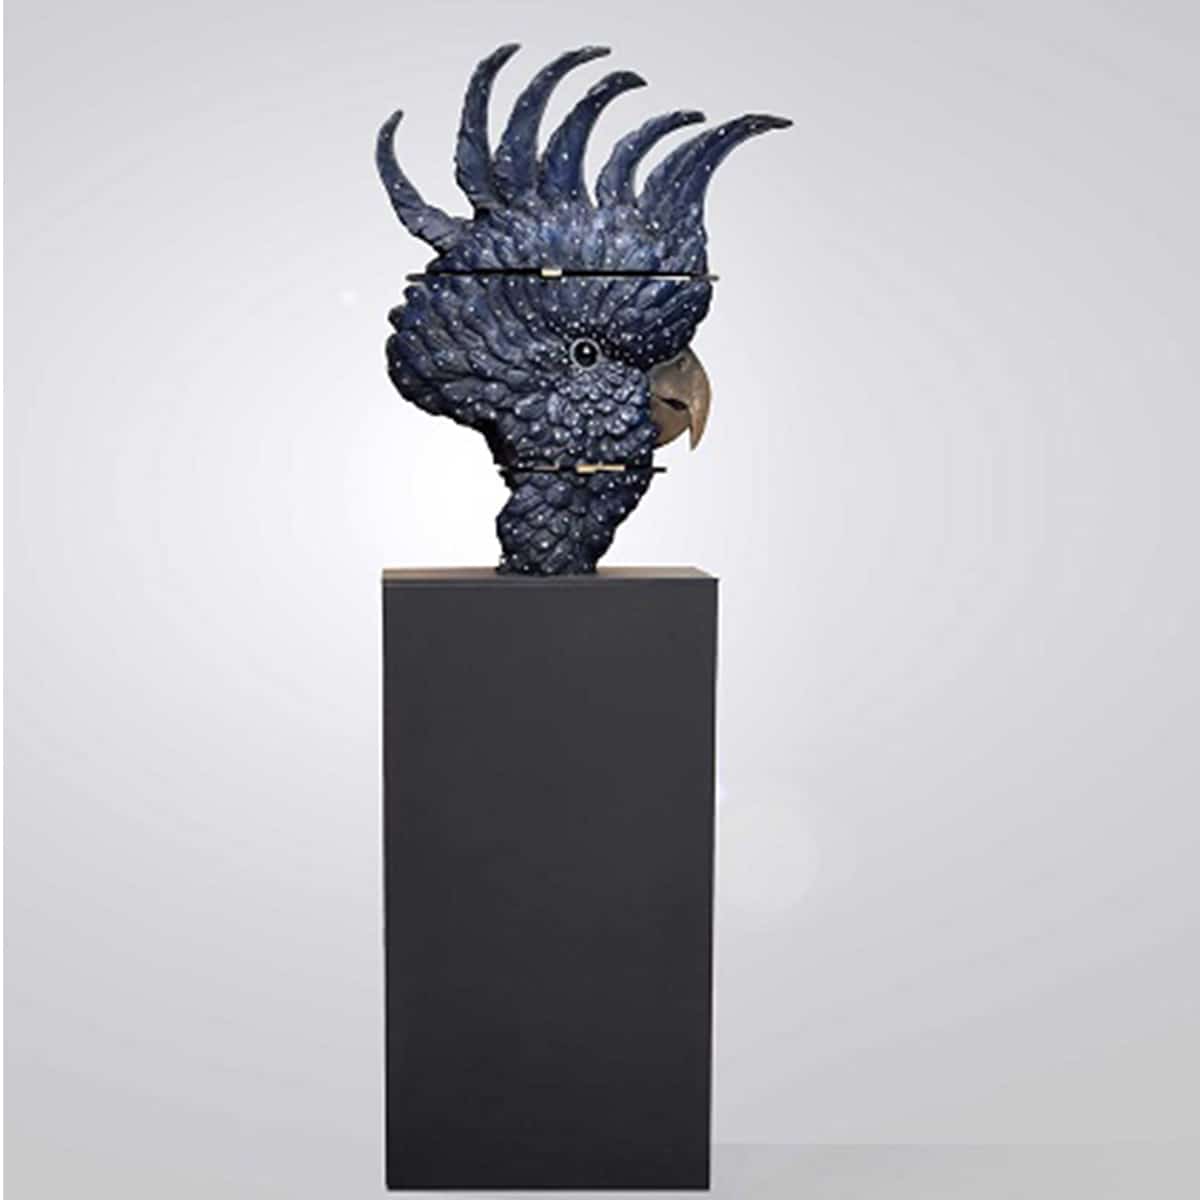 stephen-glassborow-bronze-sculpture-figurative cockatoo sculpture